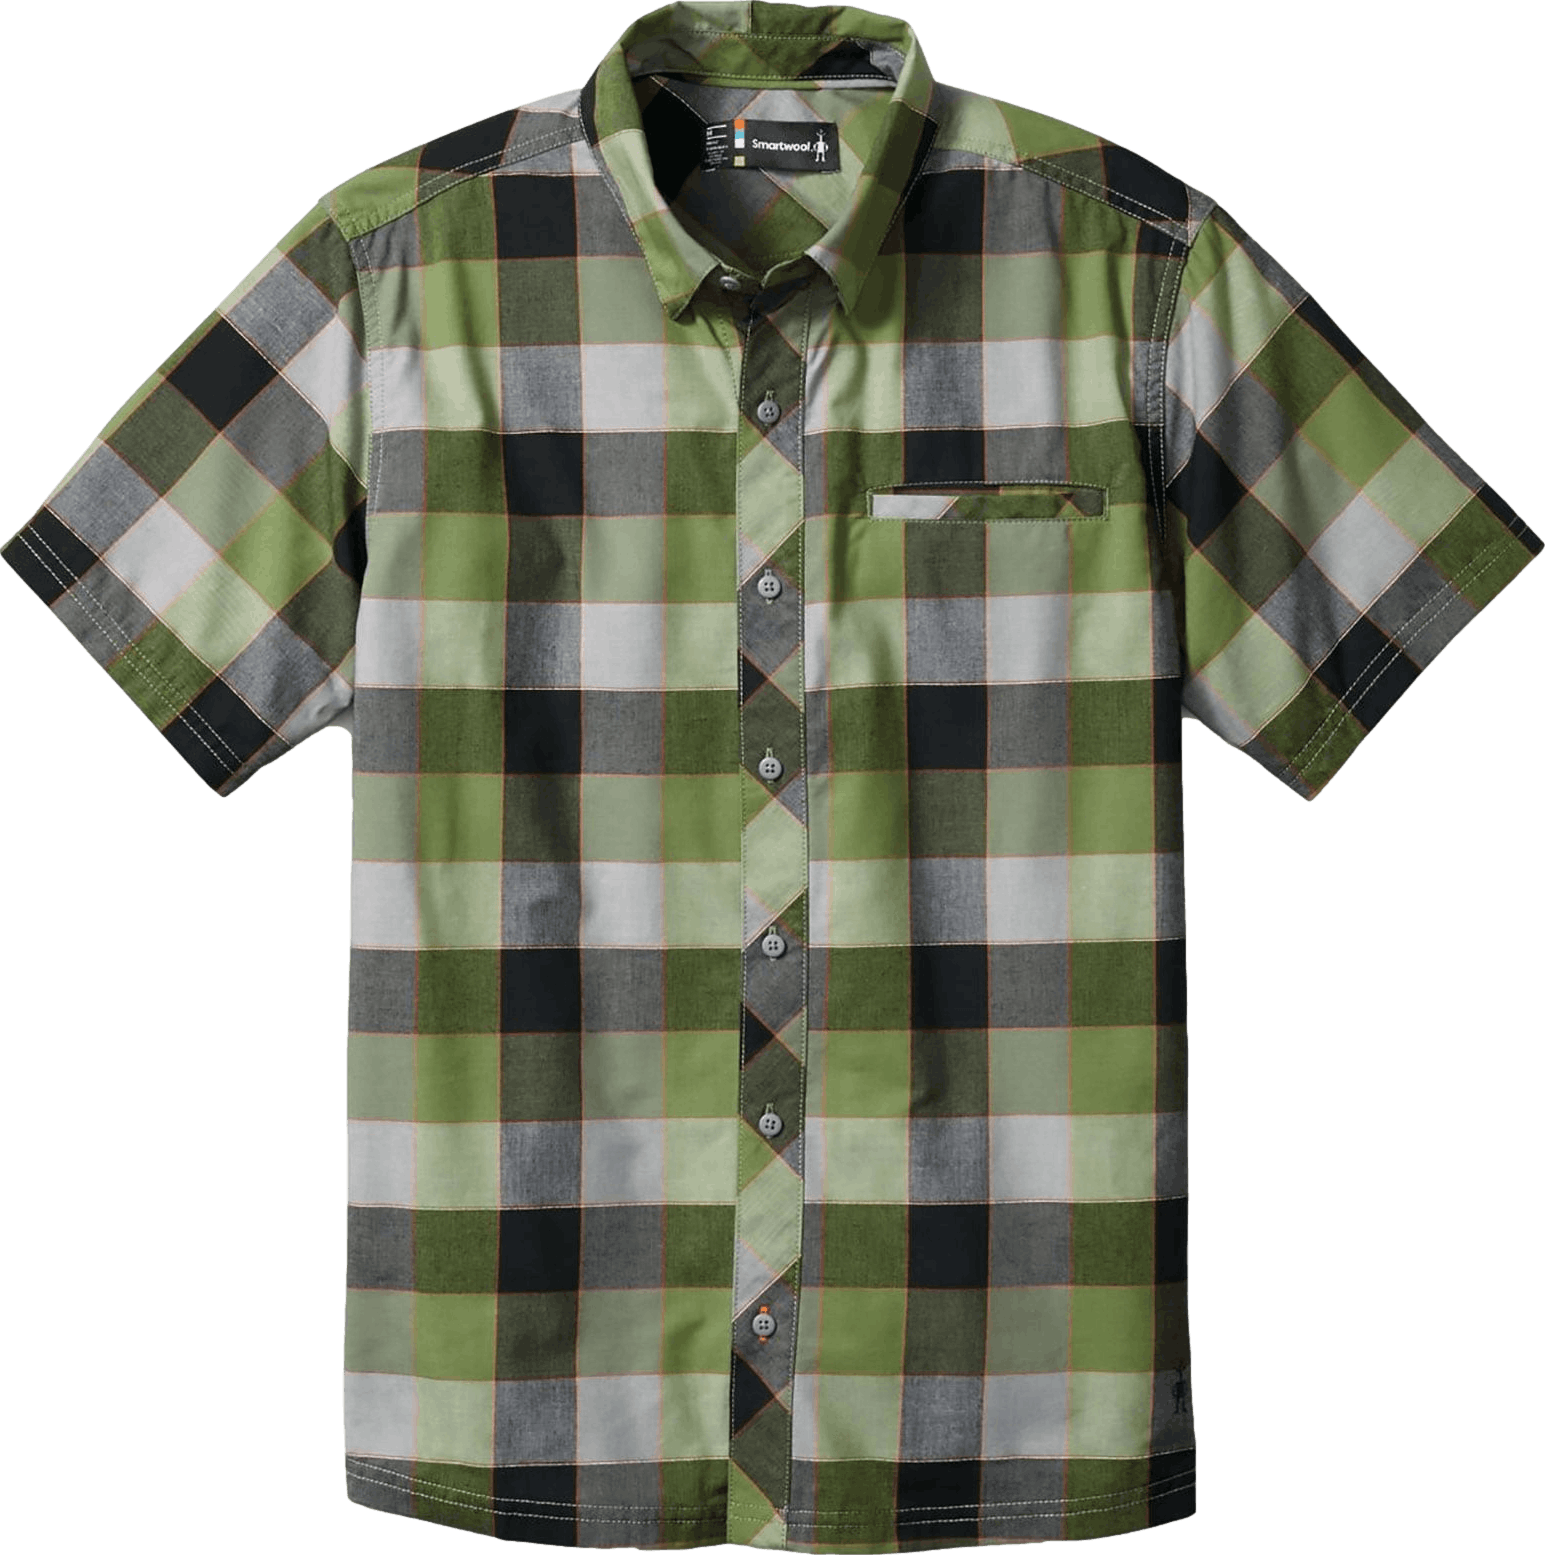 Smartwool Men's Summit County Retro Plaid Short Sleeve Shirt